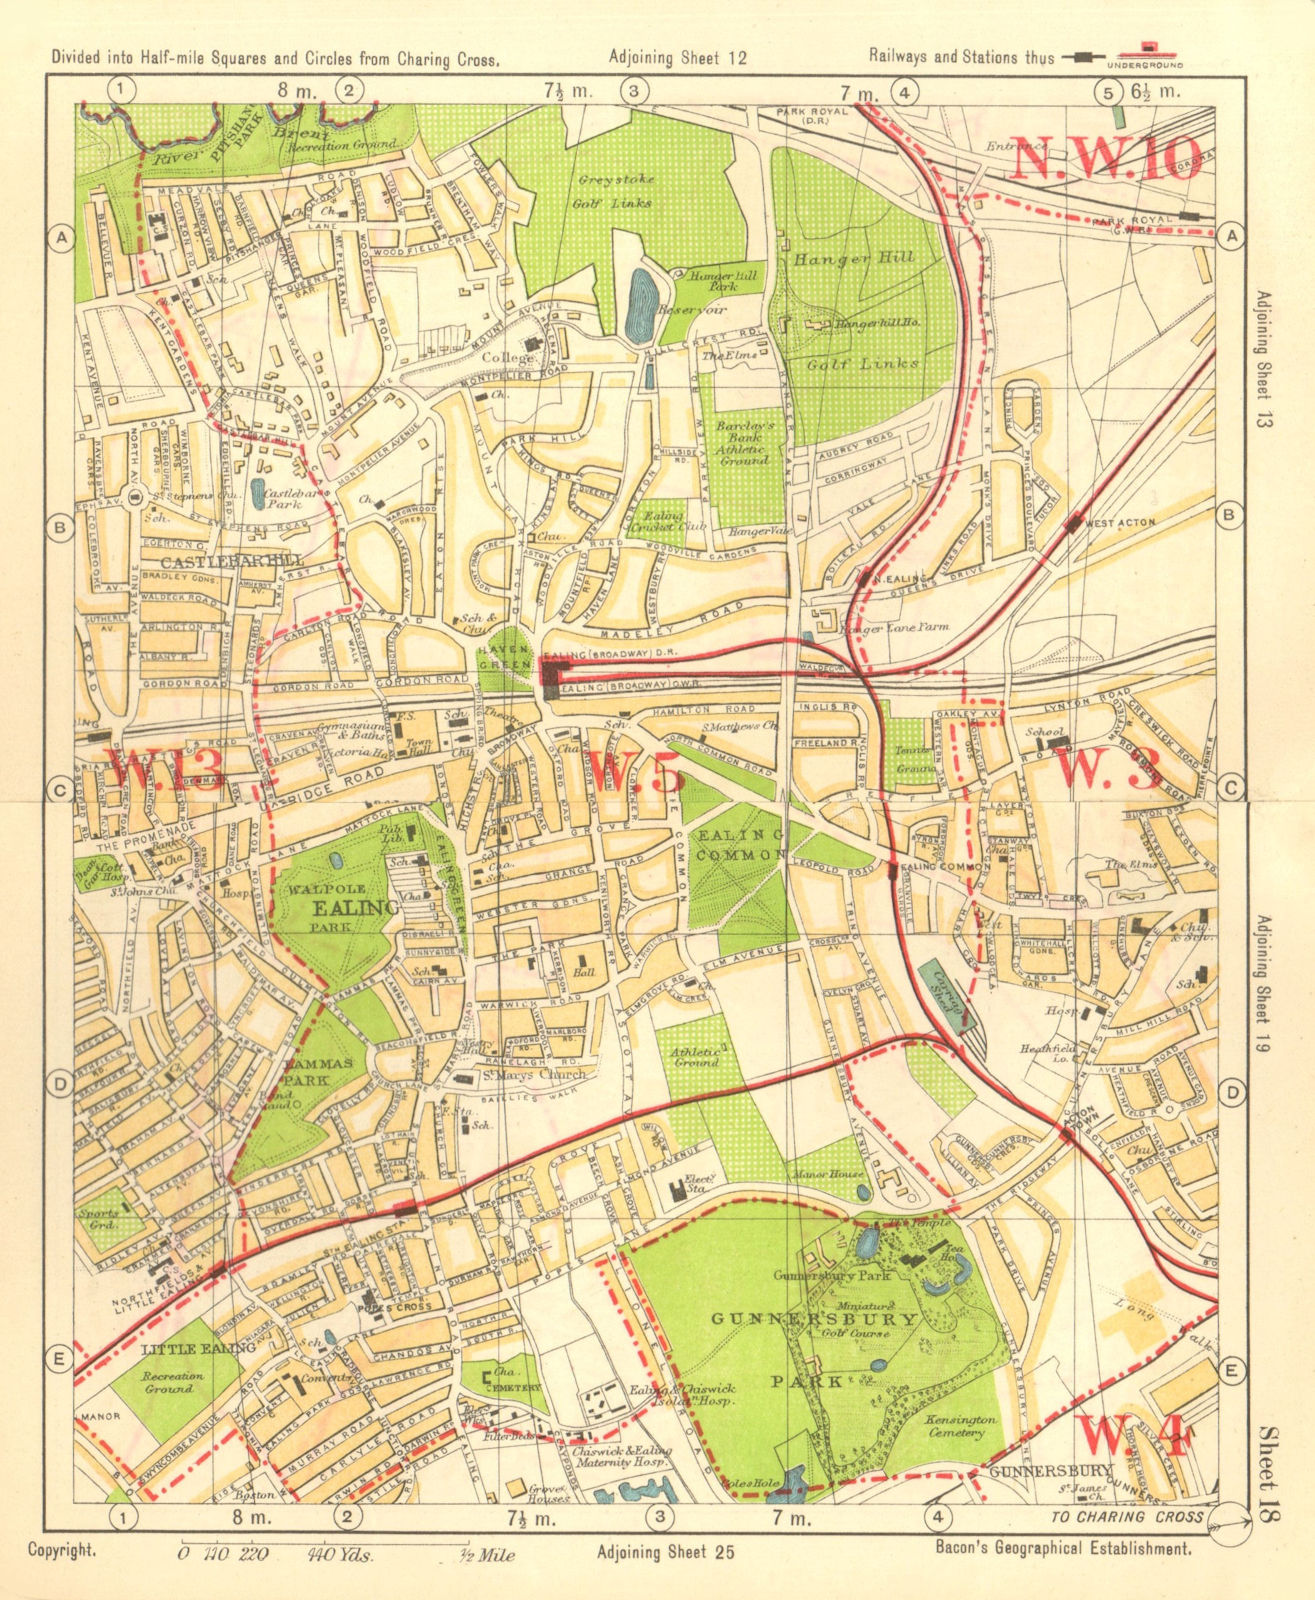 W LONDON. Ealing Park Royal West Acton Town Gunnersbury Park. BACON 1928 map